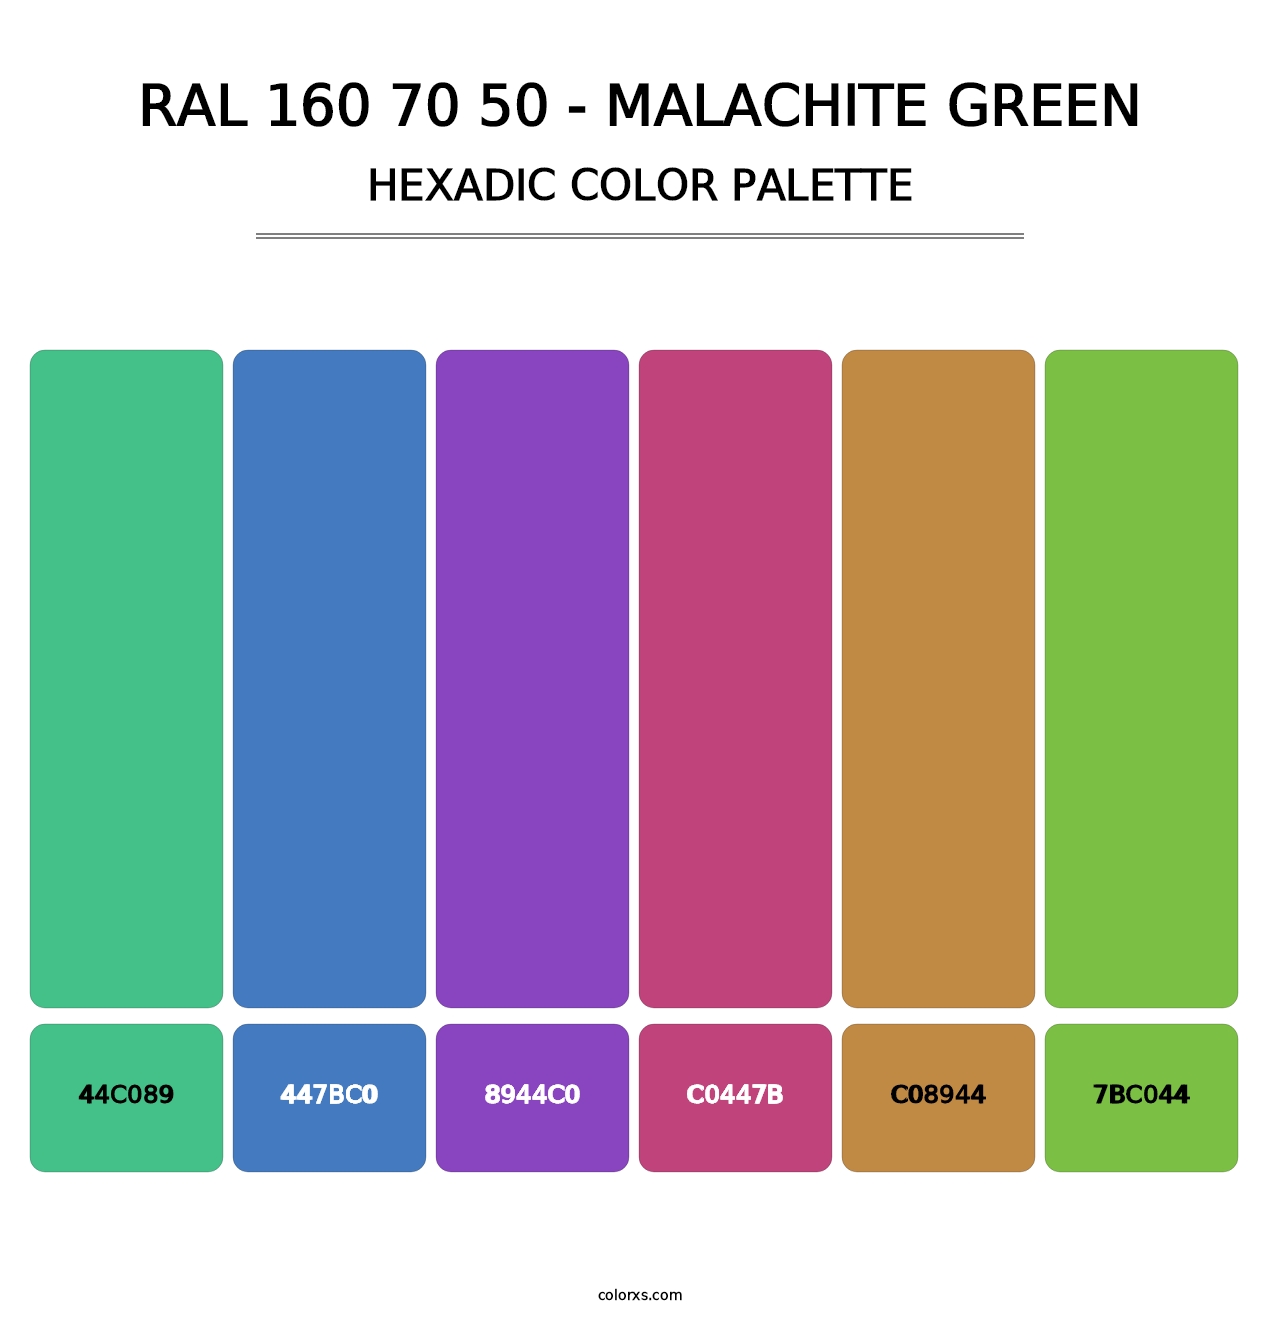 RAL 160 70 50 - Malachite Green - Hexadic Color Palette